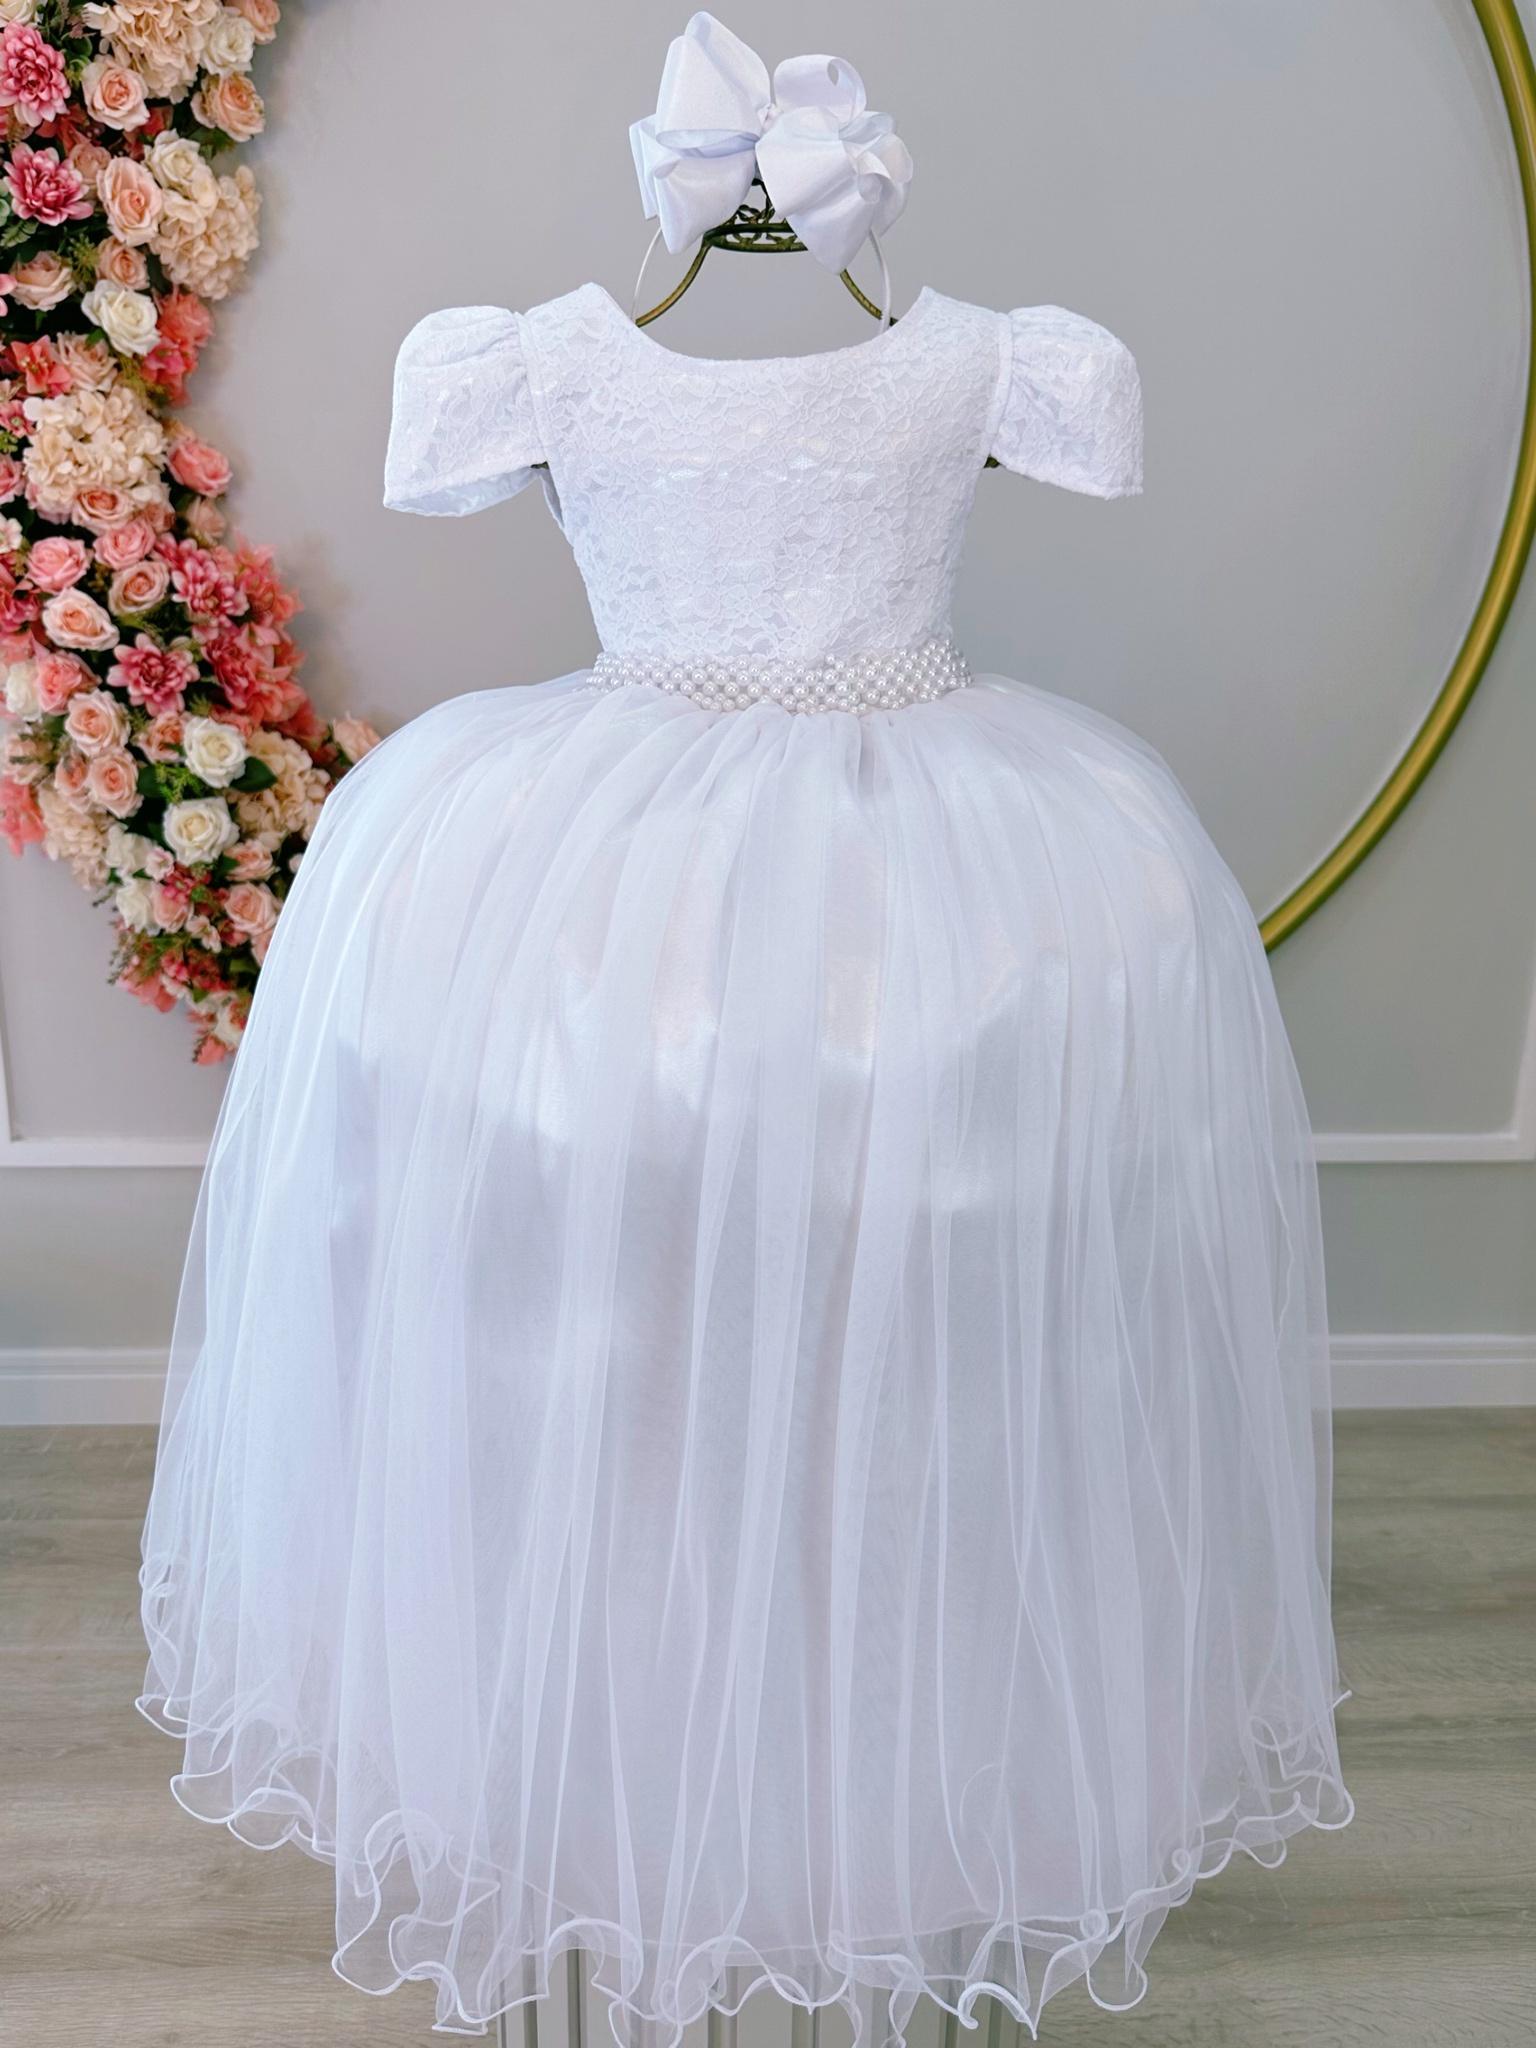 Vestido Infantil Realeza Branco C/ Renda Pérolas Festa Luxo